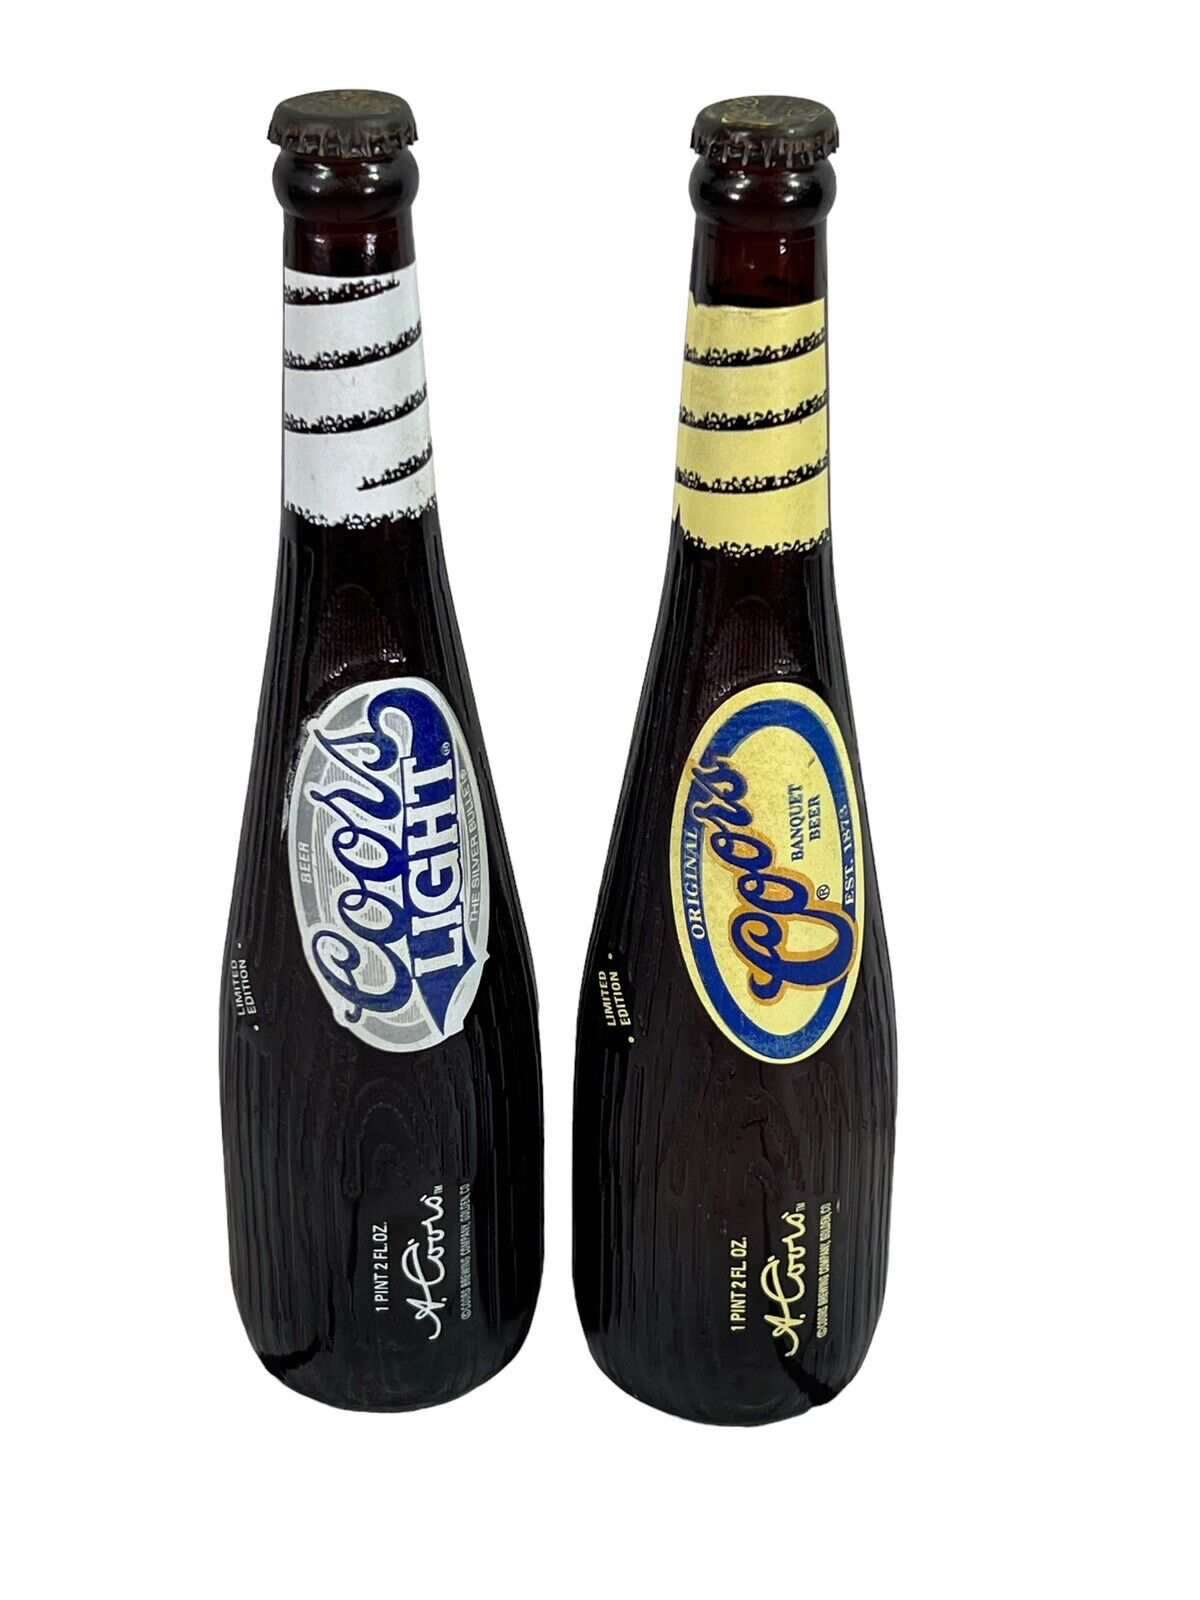 Coors & Coors Light 1996 Limited Edition Baseball Bat Bottles empty man cave